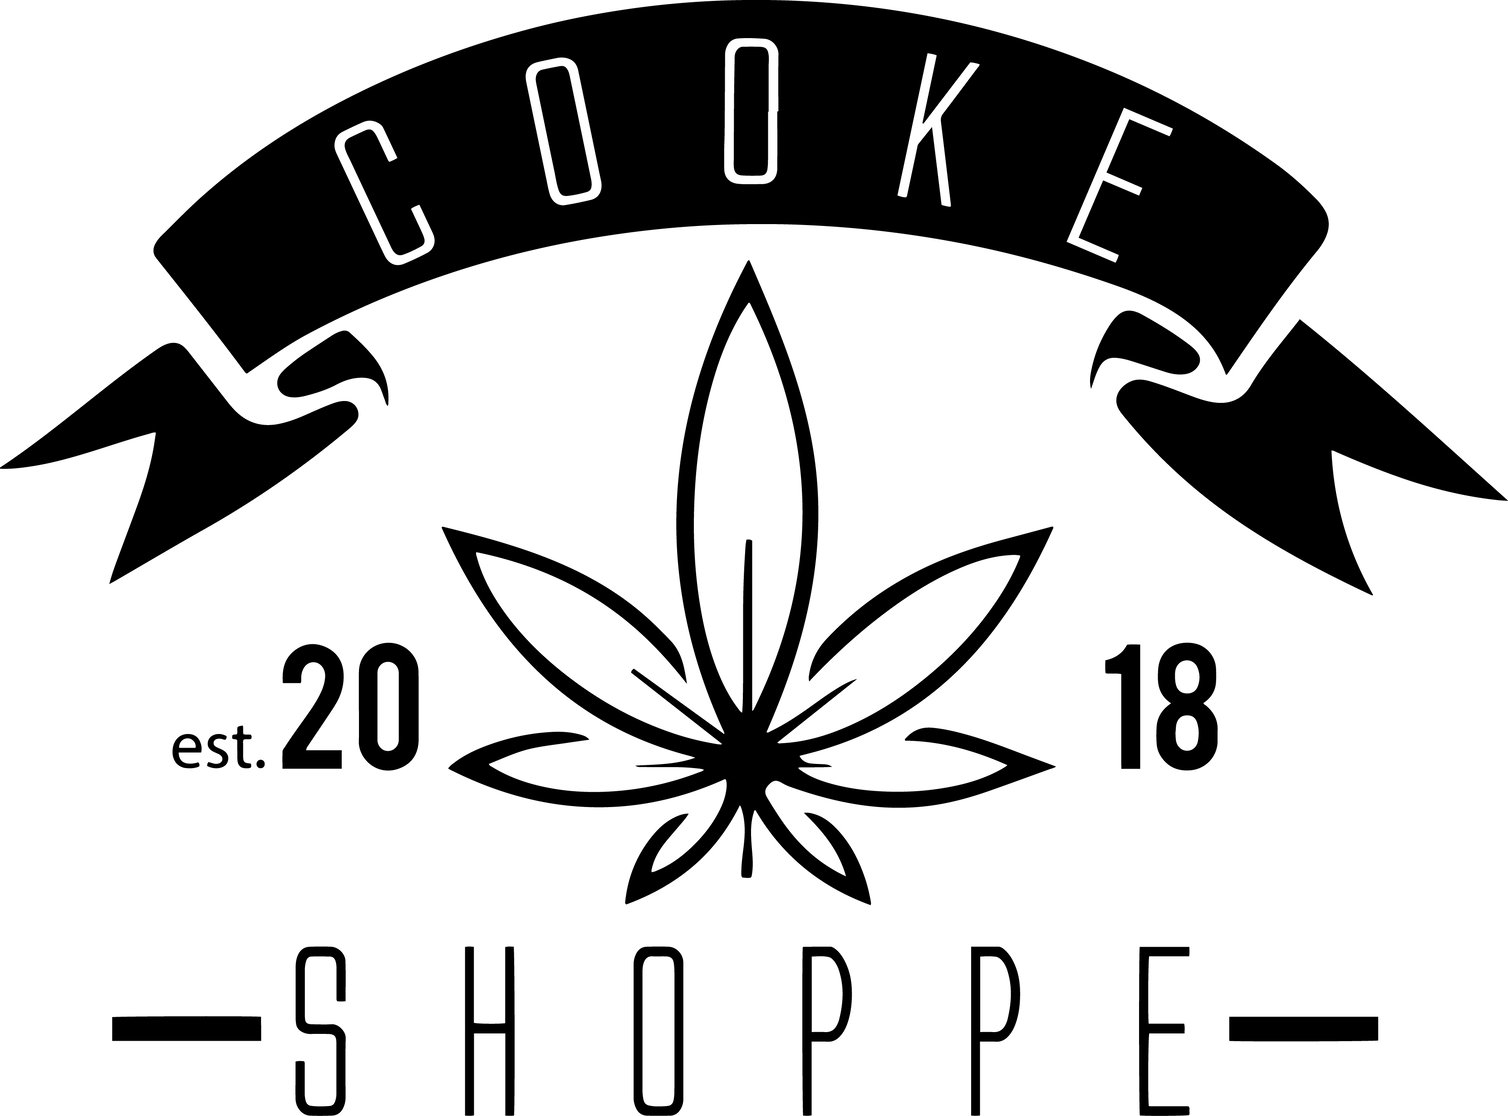 The Cooke Shoppe